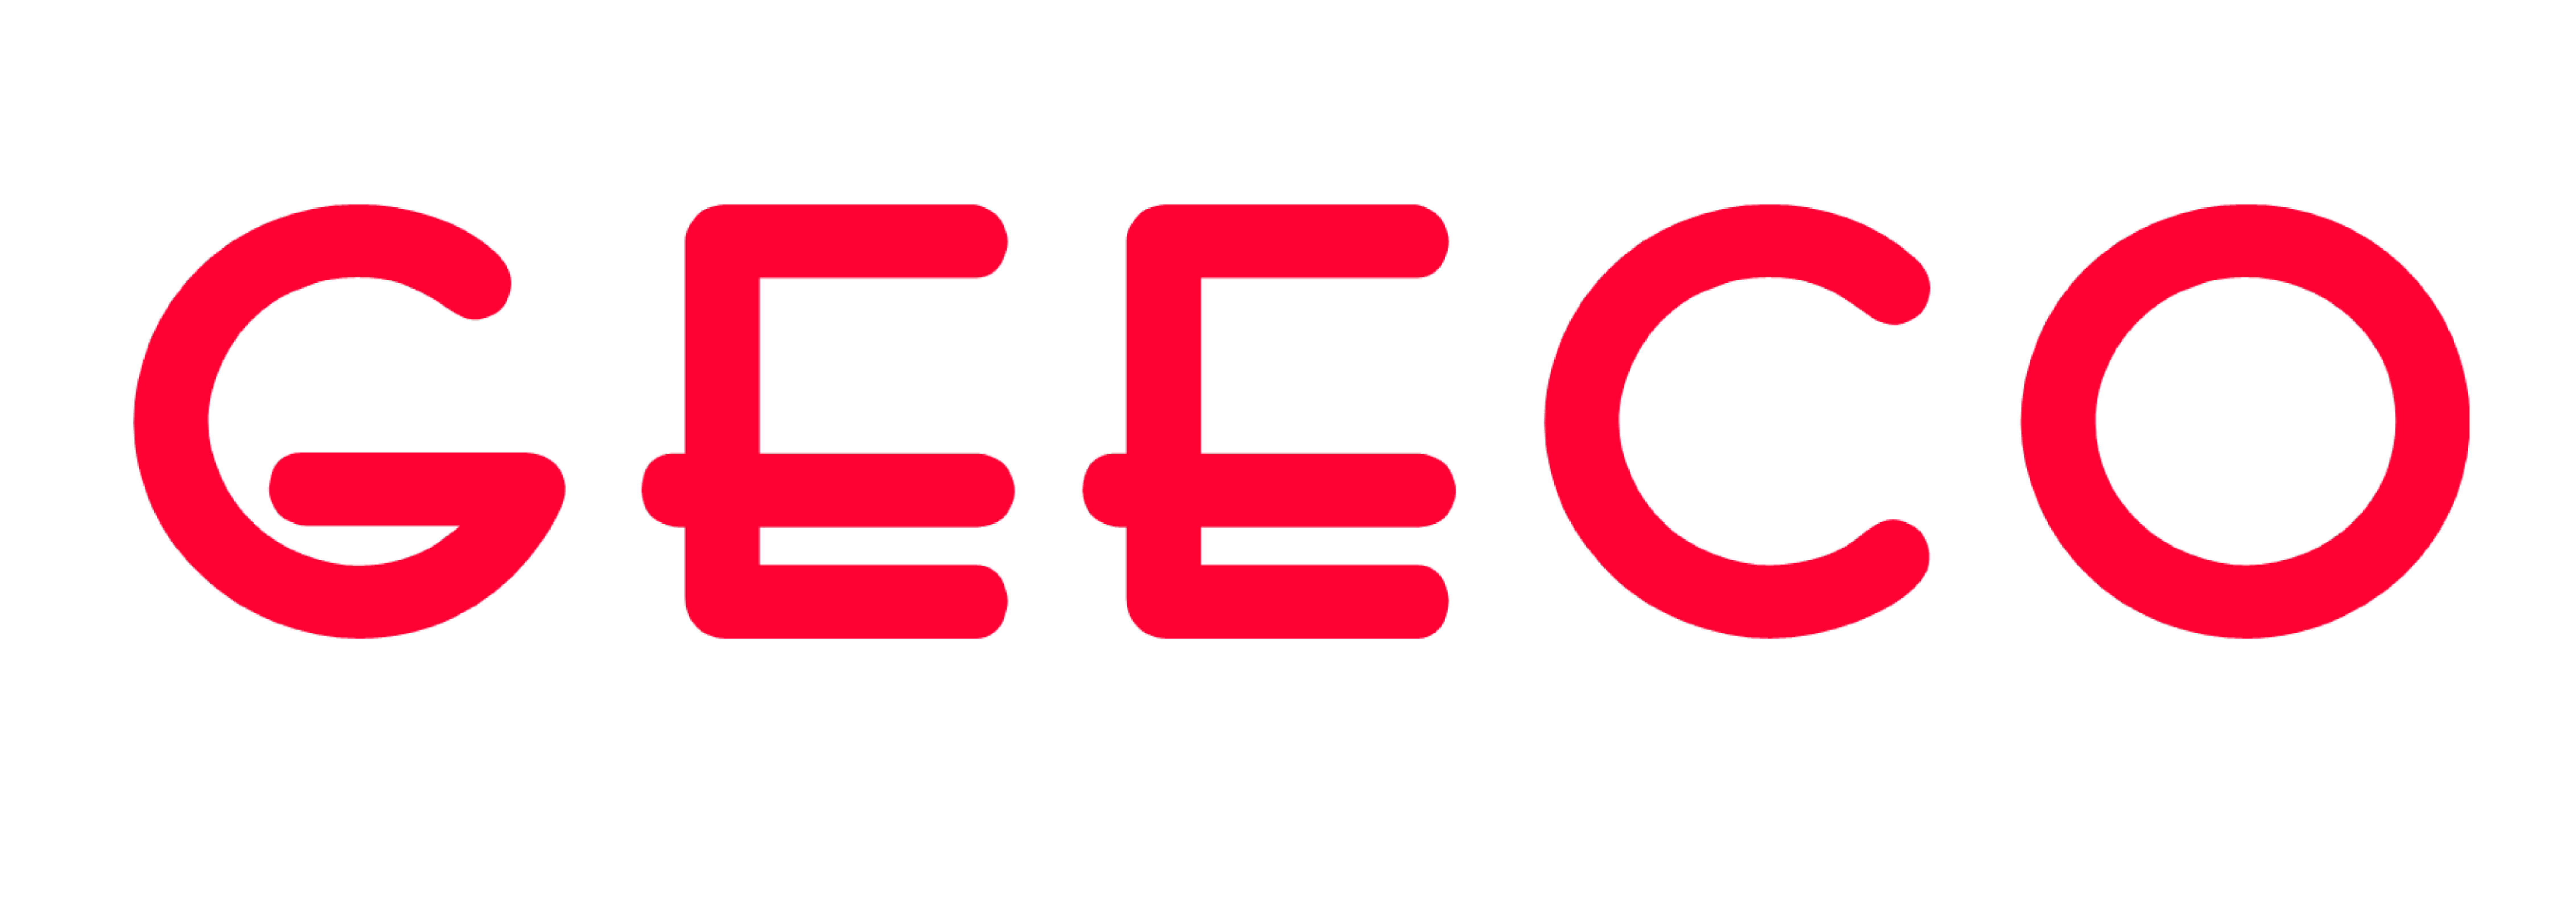 Geeco